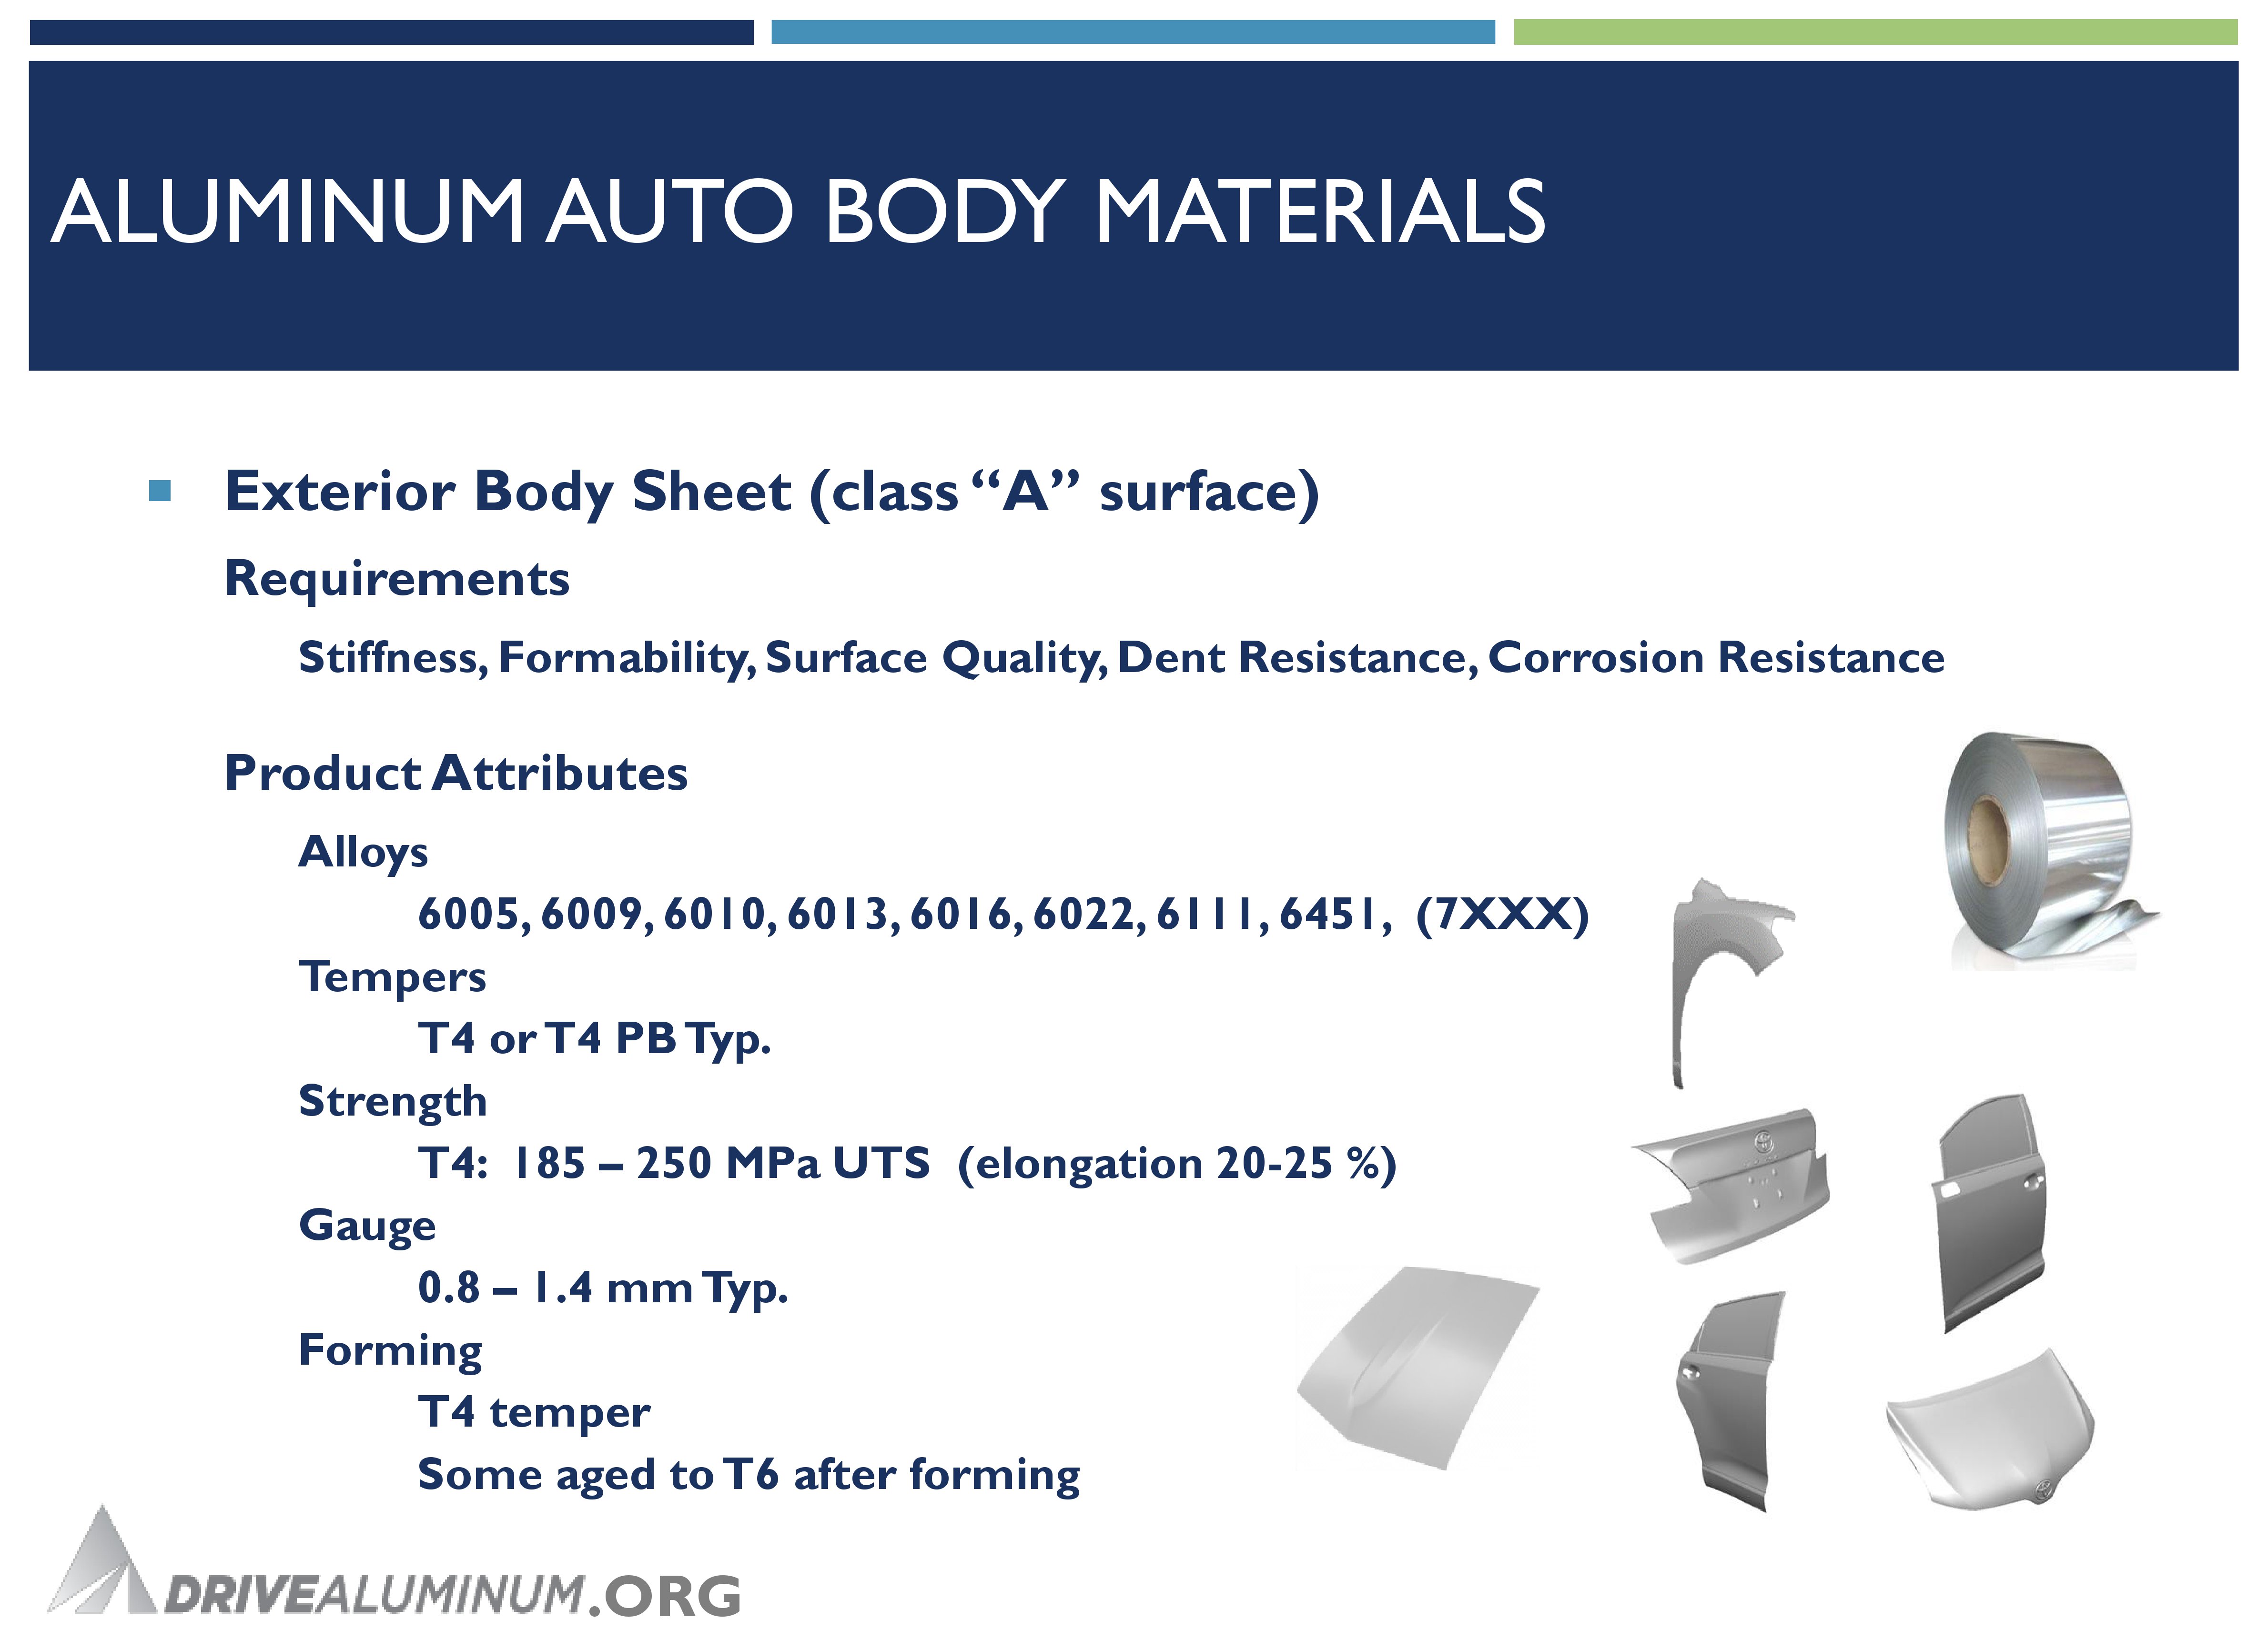 How do you determine the grade of an aluminum alloy?